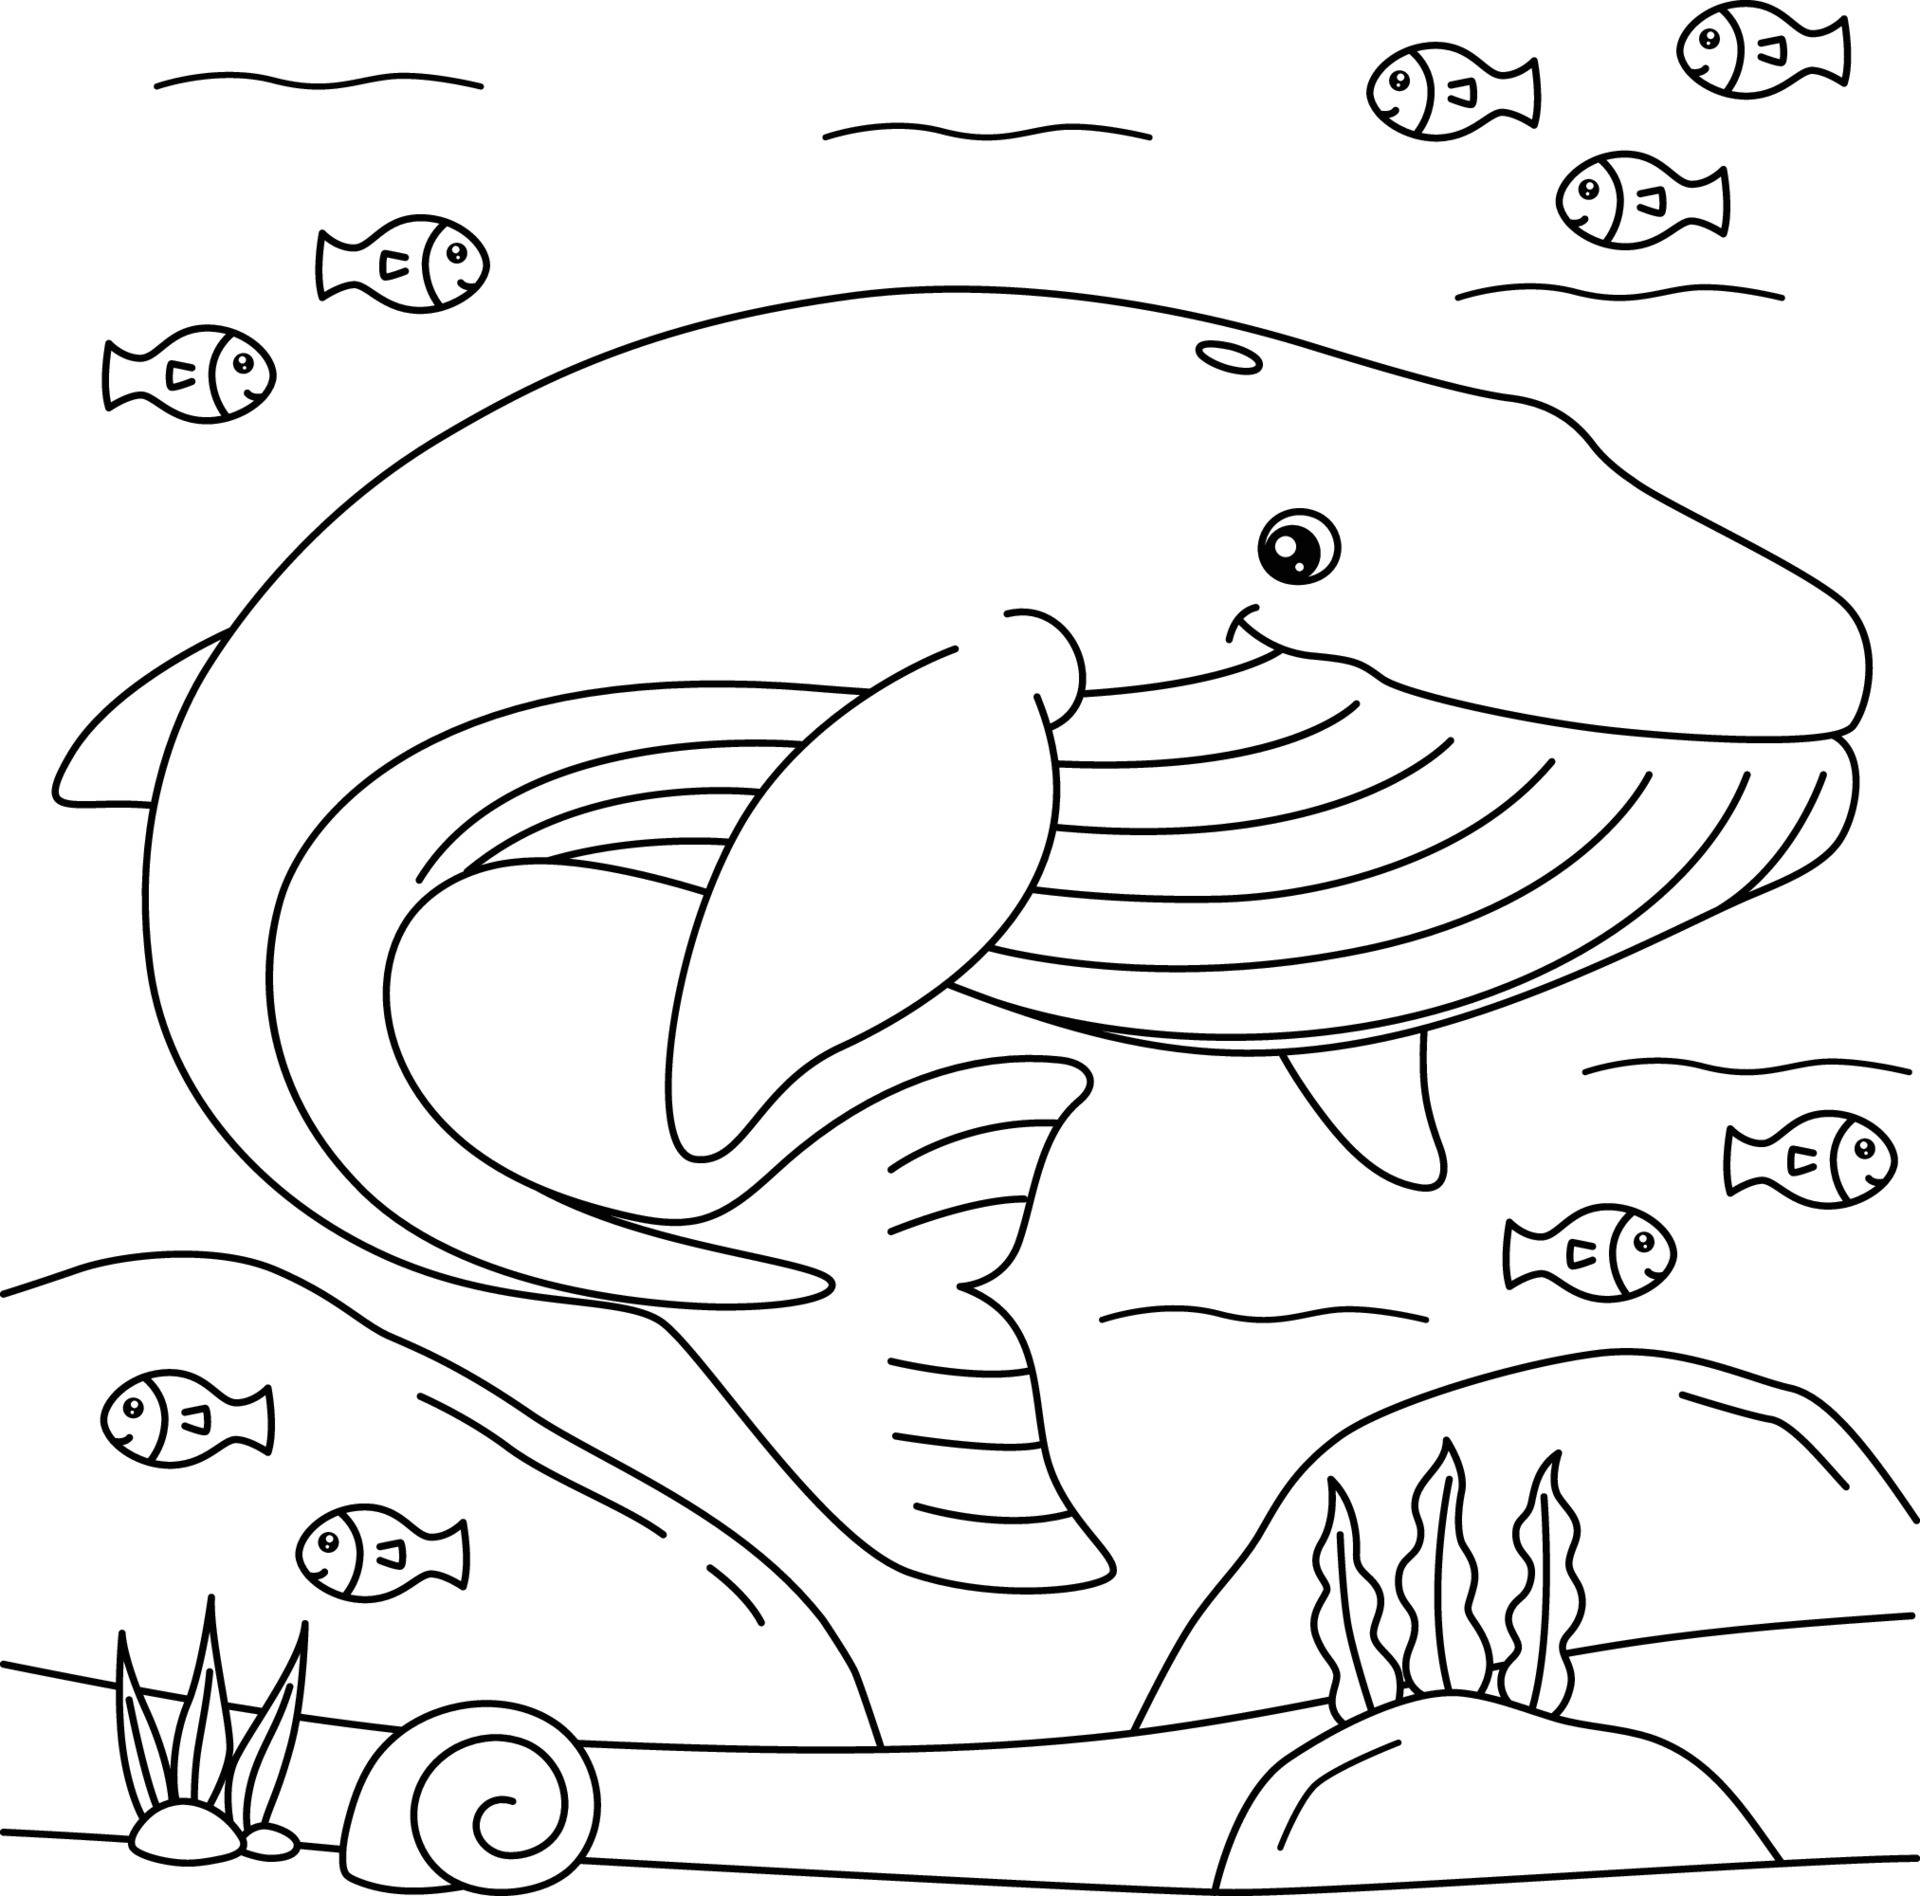 Blue Whale Coloring Page for Kids - SheetalColor.com